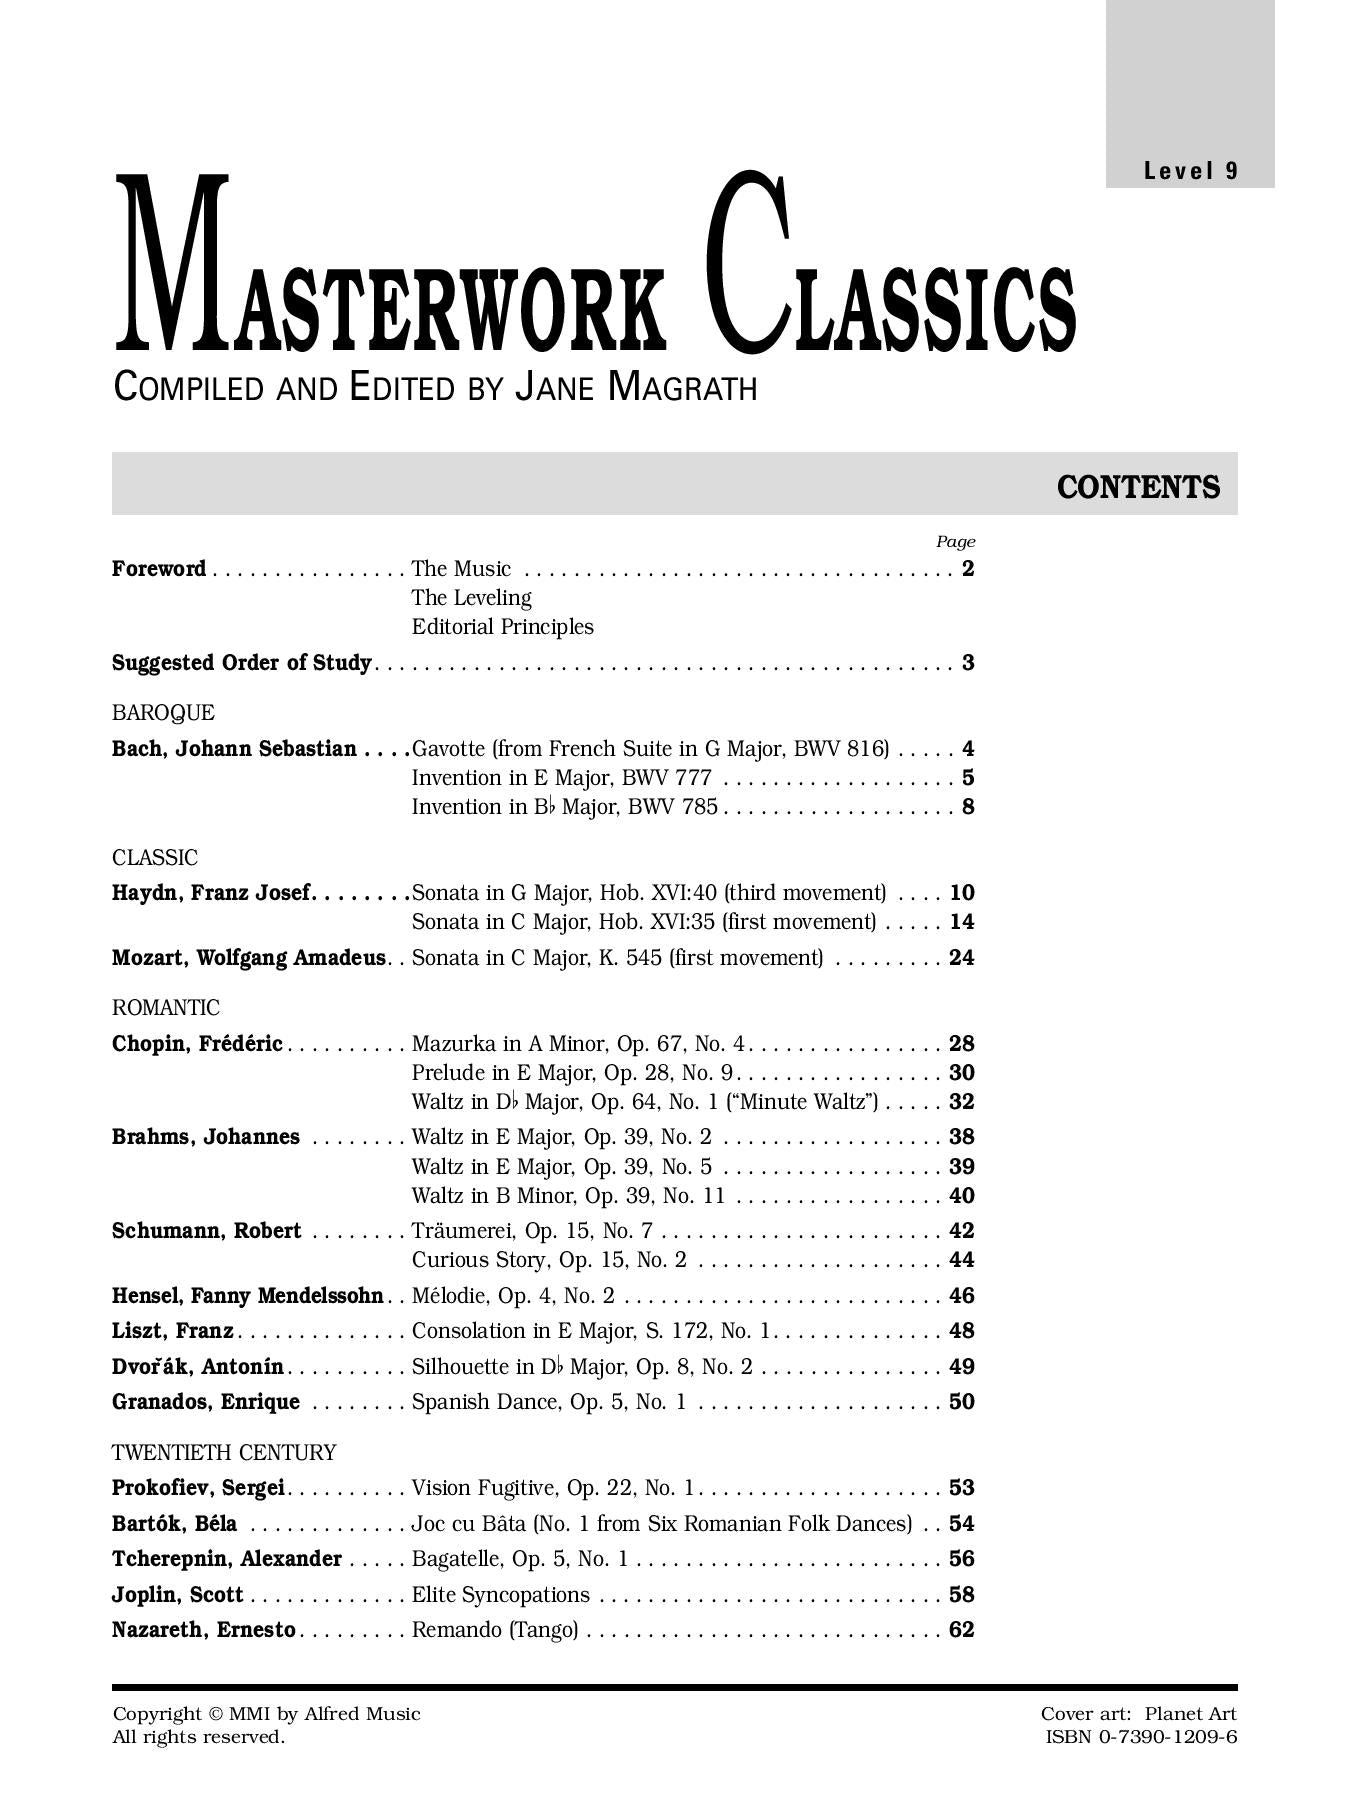 Masterwork Classics, Level 9